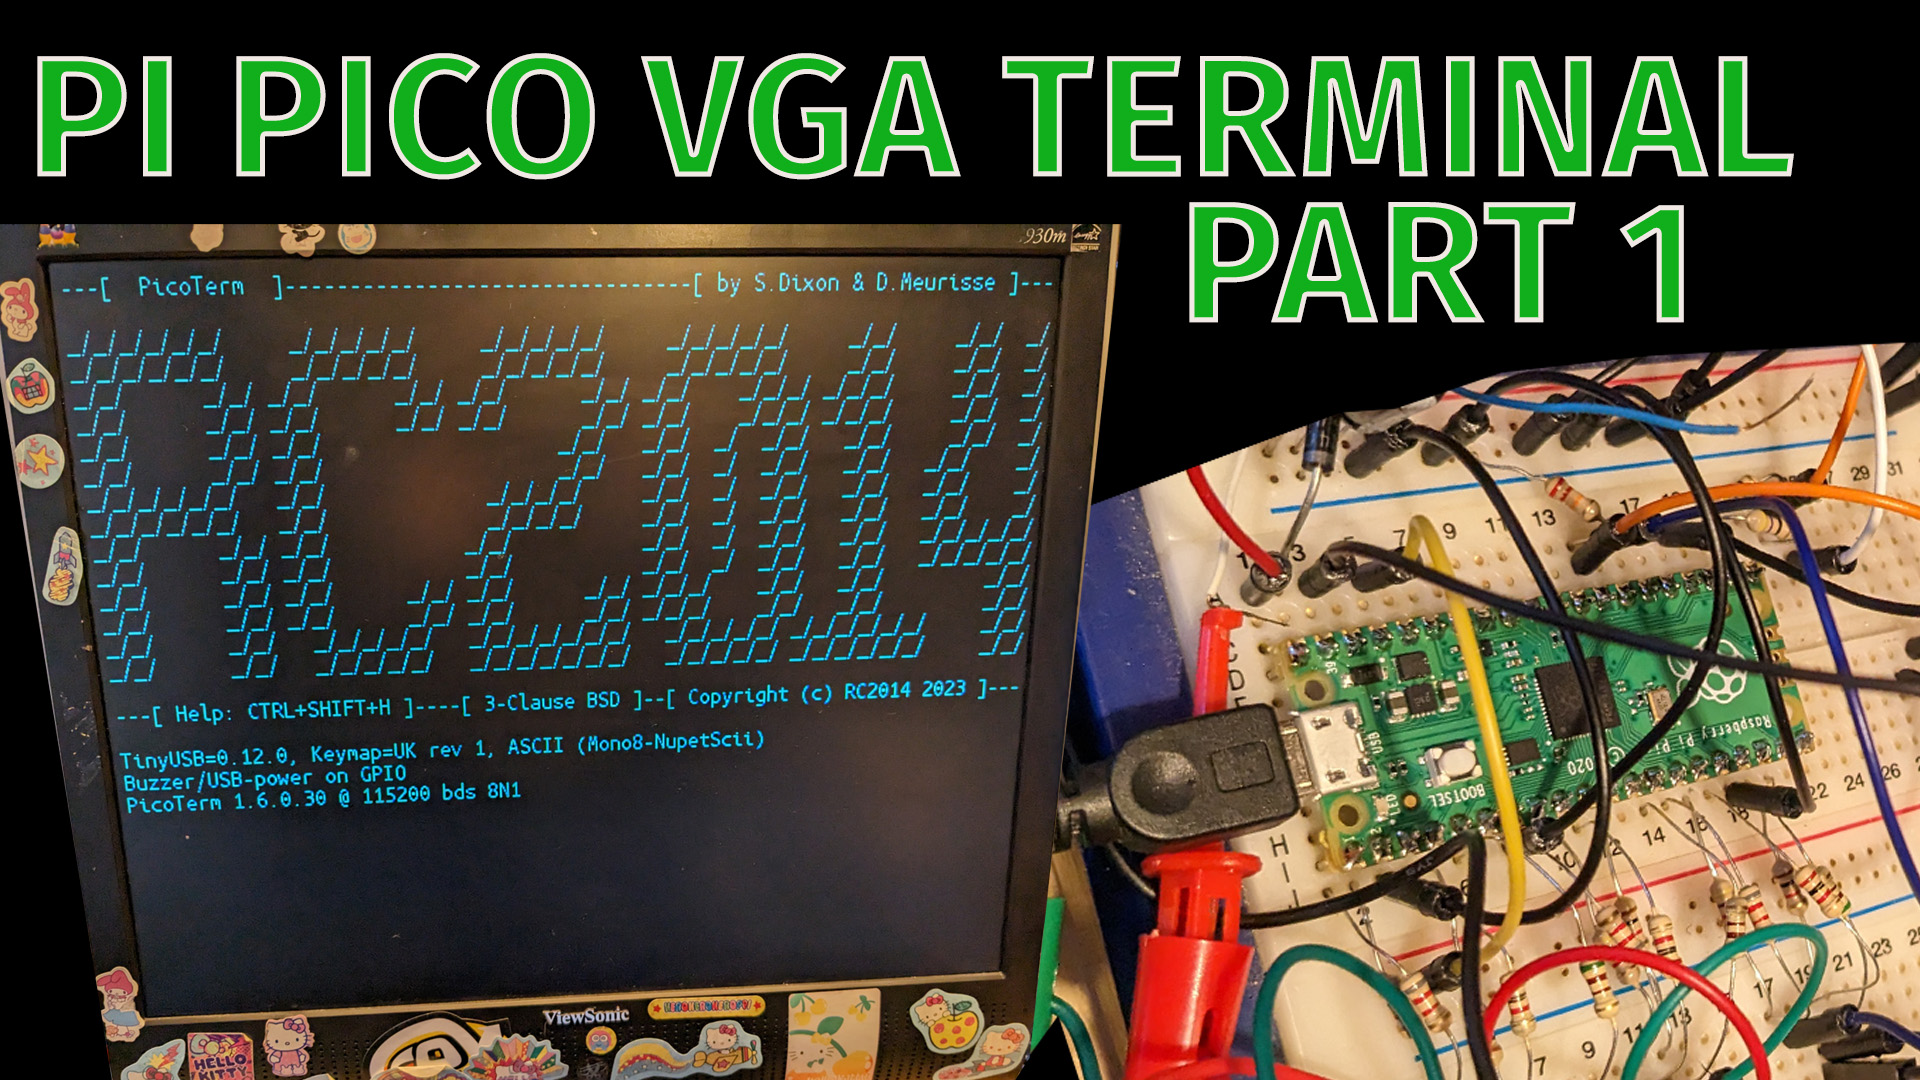 RC2014 Raspberry Pi Pico VGA Terminal Self-Build